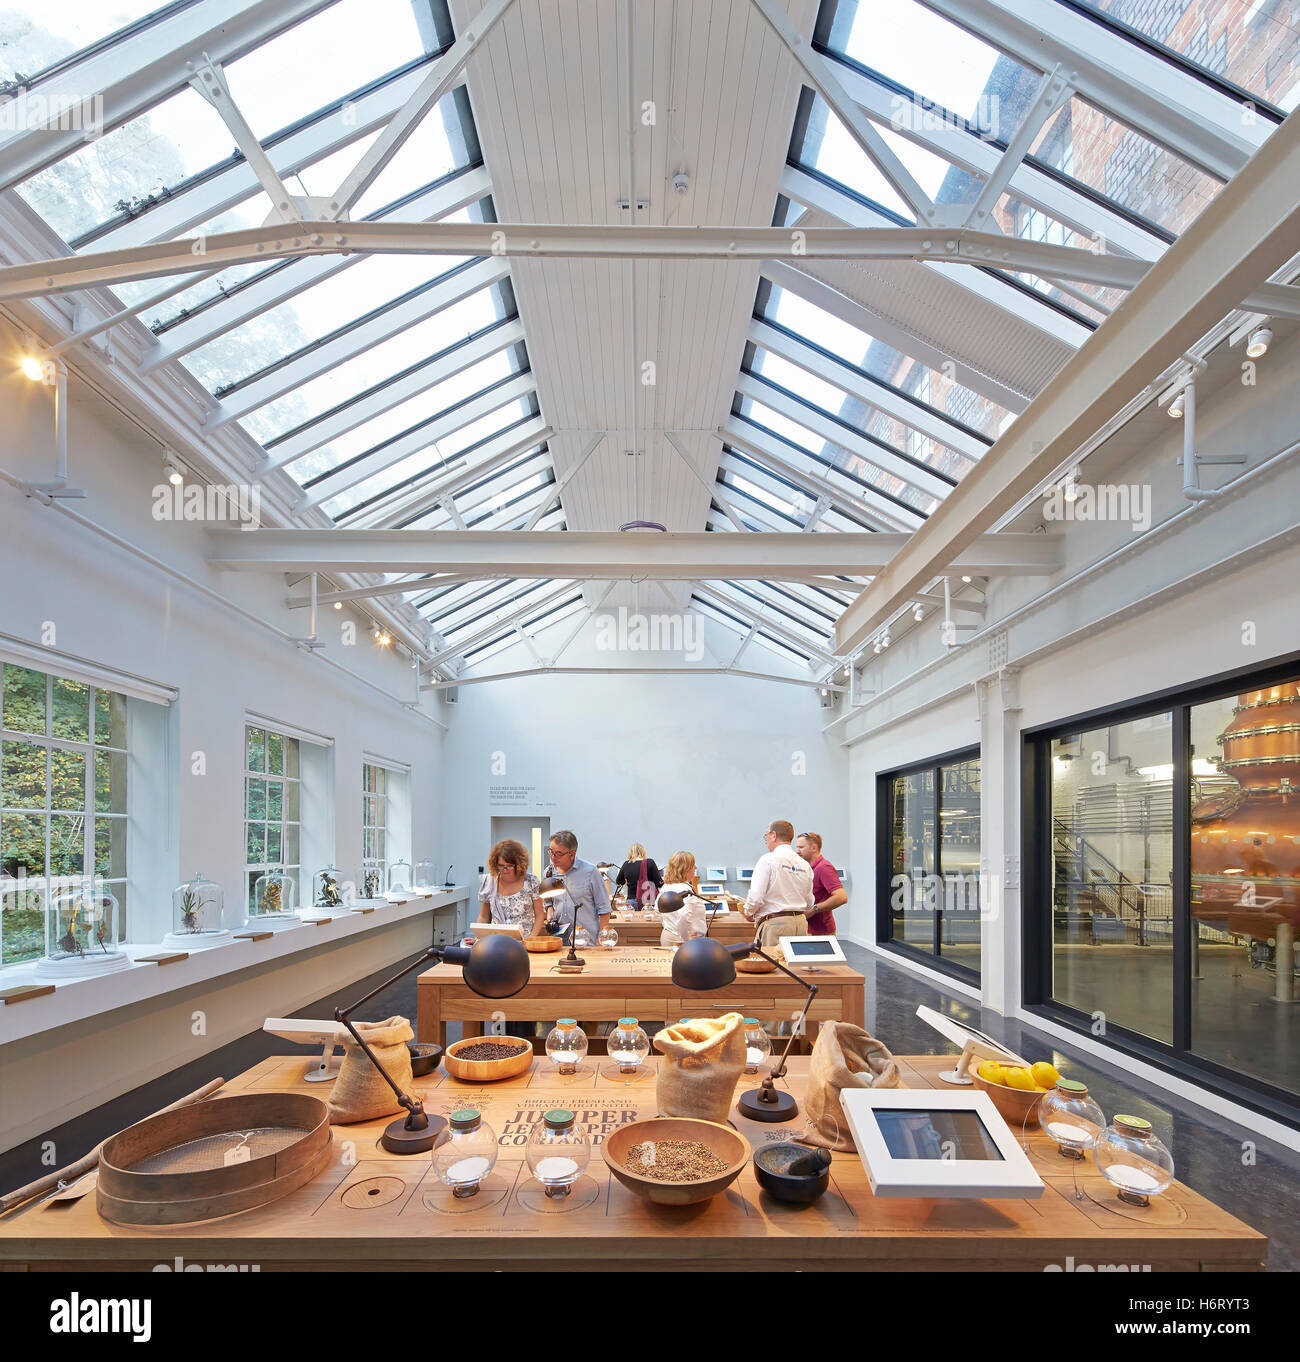 Specimen room with glass roof. Bombay Sapphire Distillery, Laverstoke, United Kingdom. Architect: Heatherwick, 2014. Stock Photo